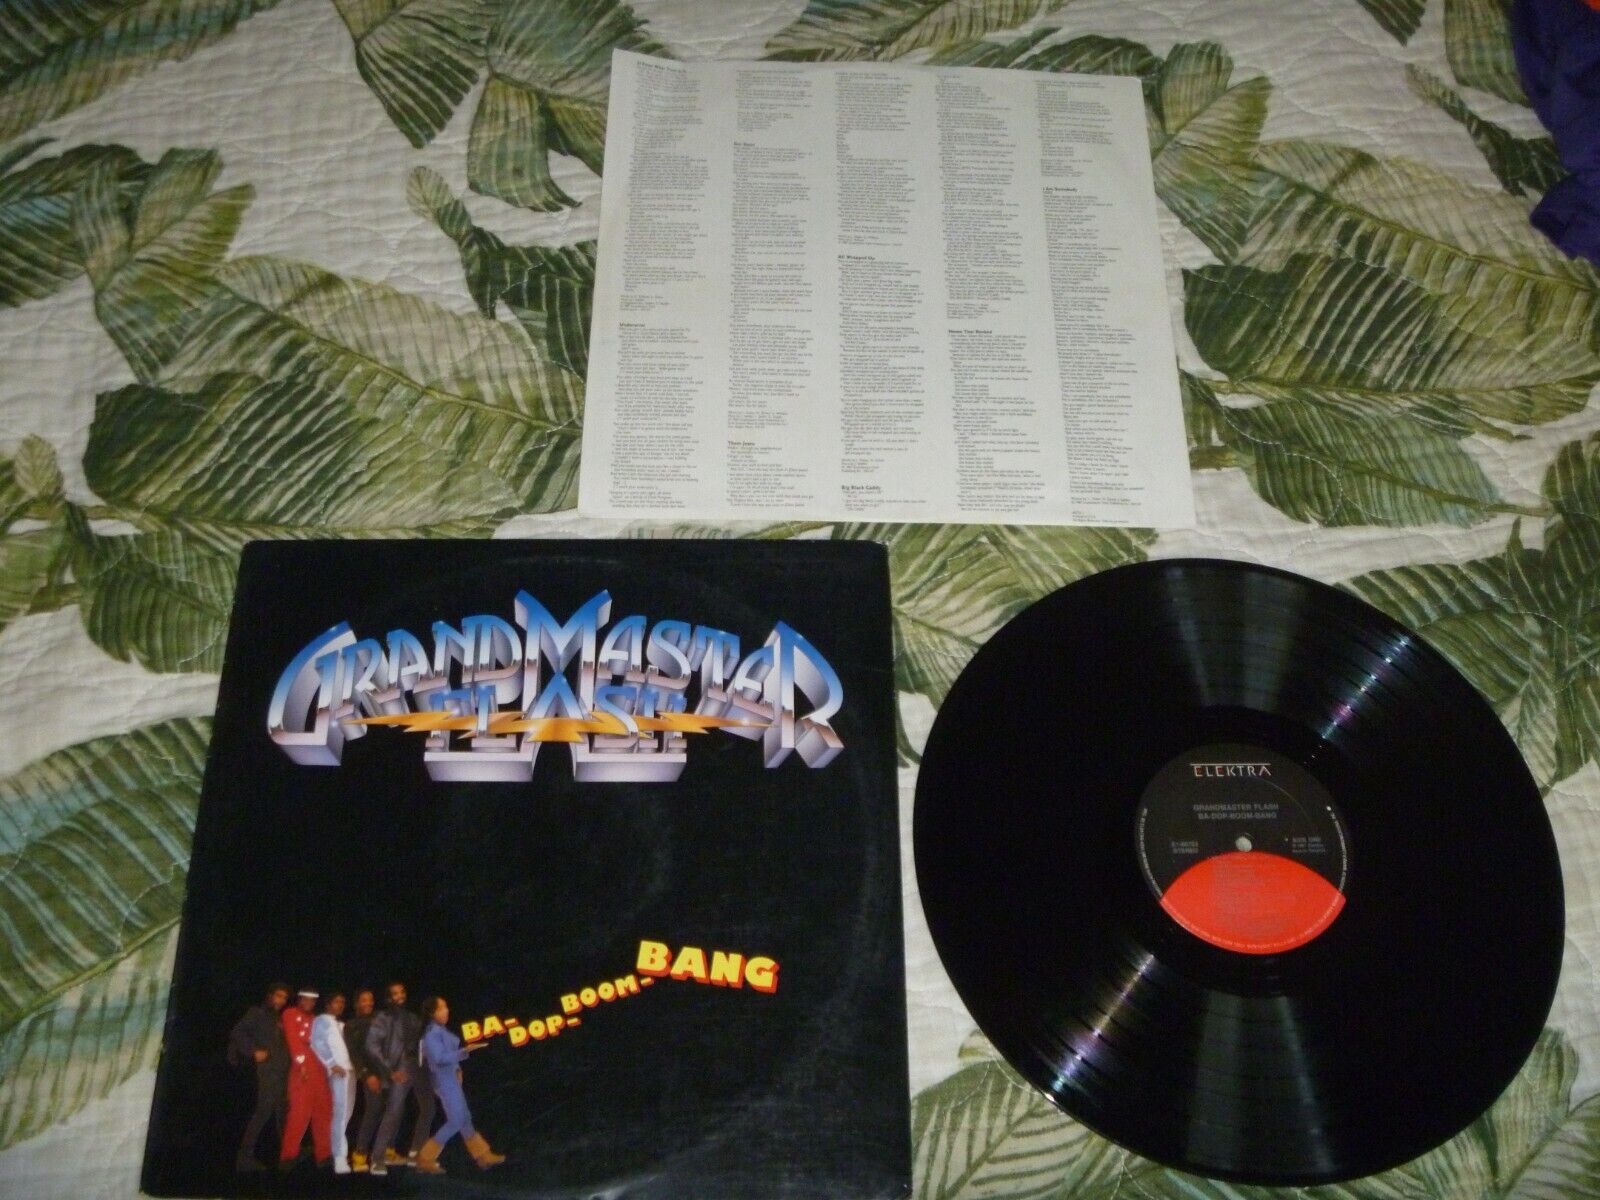 LOT VINYL LP ALBUM GRANDMASTER FLASH BA-DOP-BOOM-BANG HIP HOP RAP LYRICS VG++